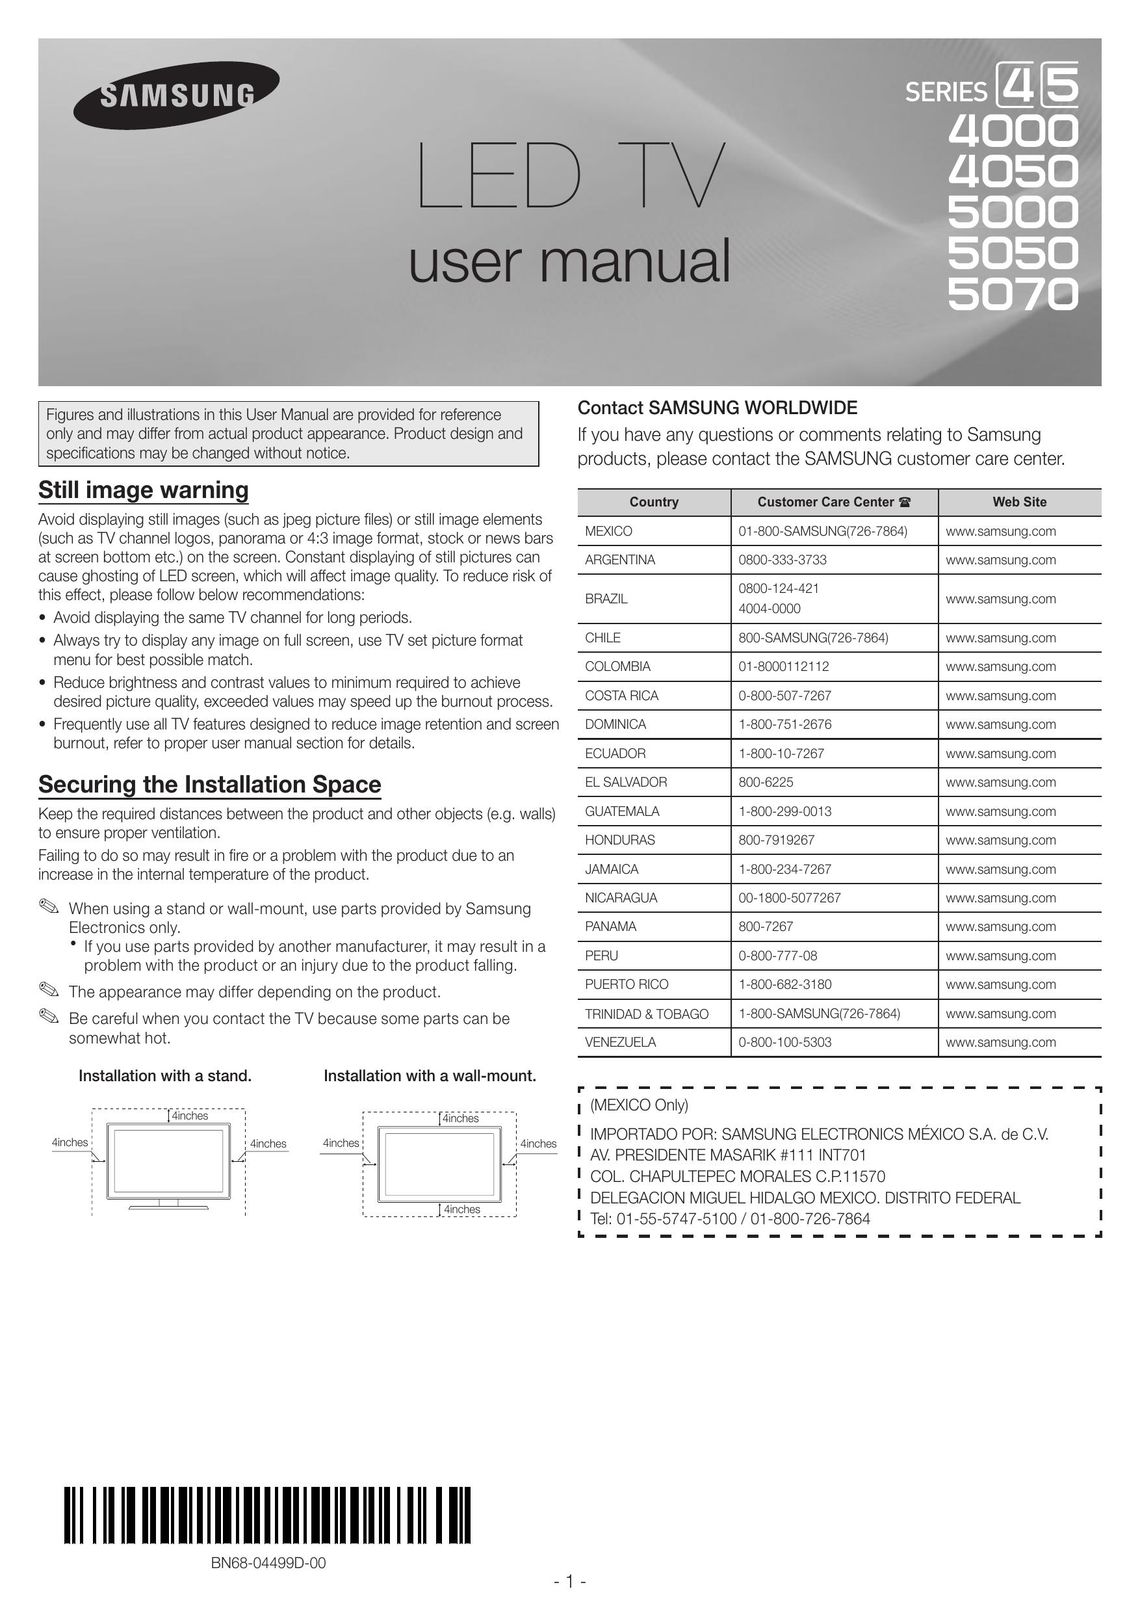 Samsung 5050 Model Vehicle User Manual